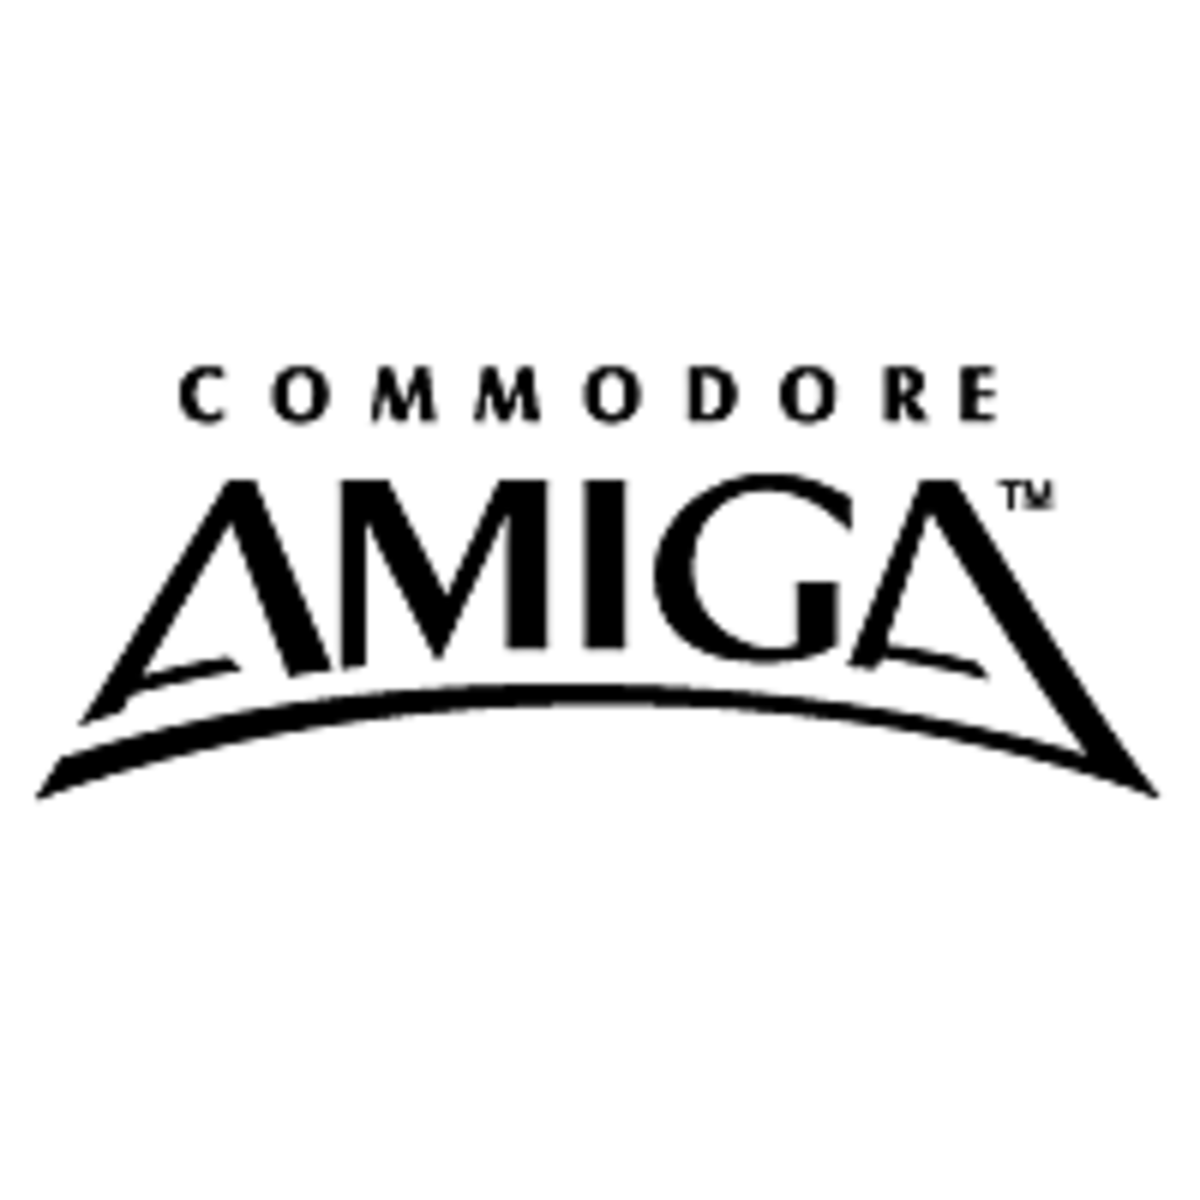 The Amiga Computer Lives On